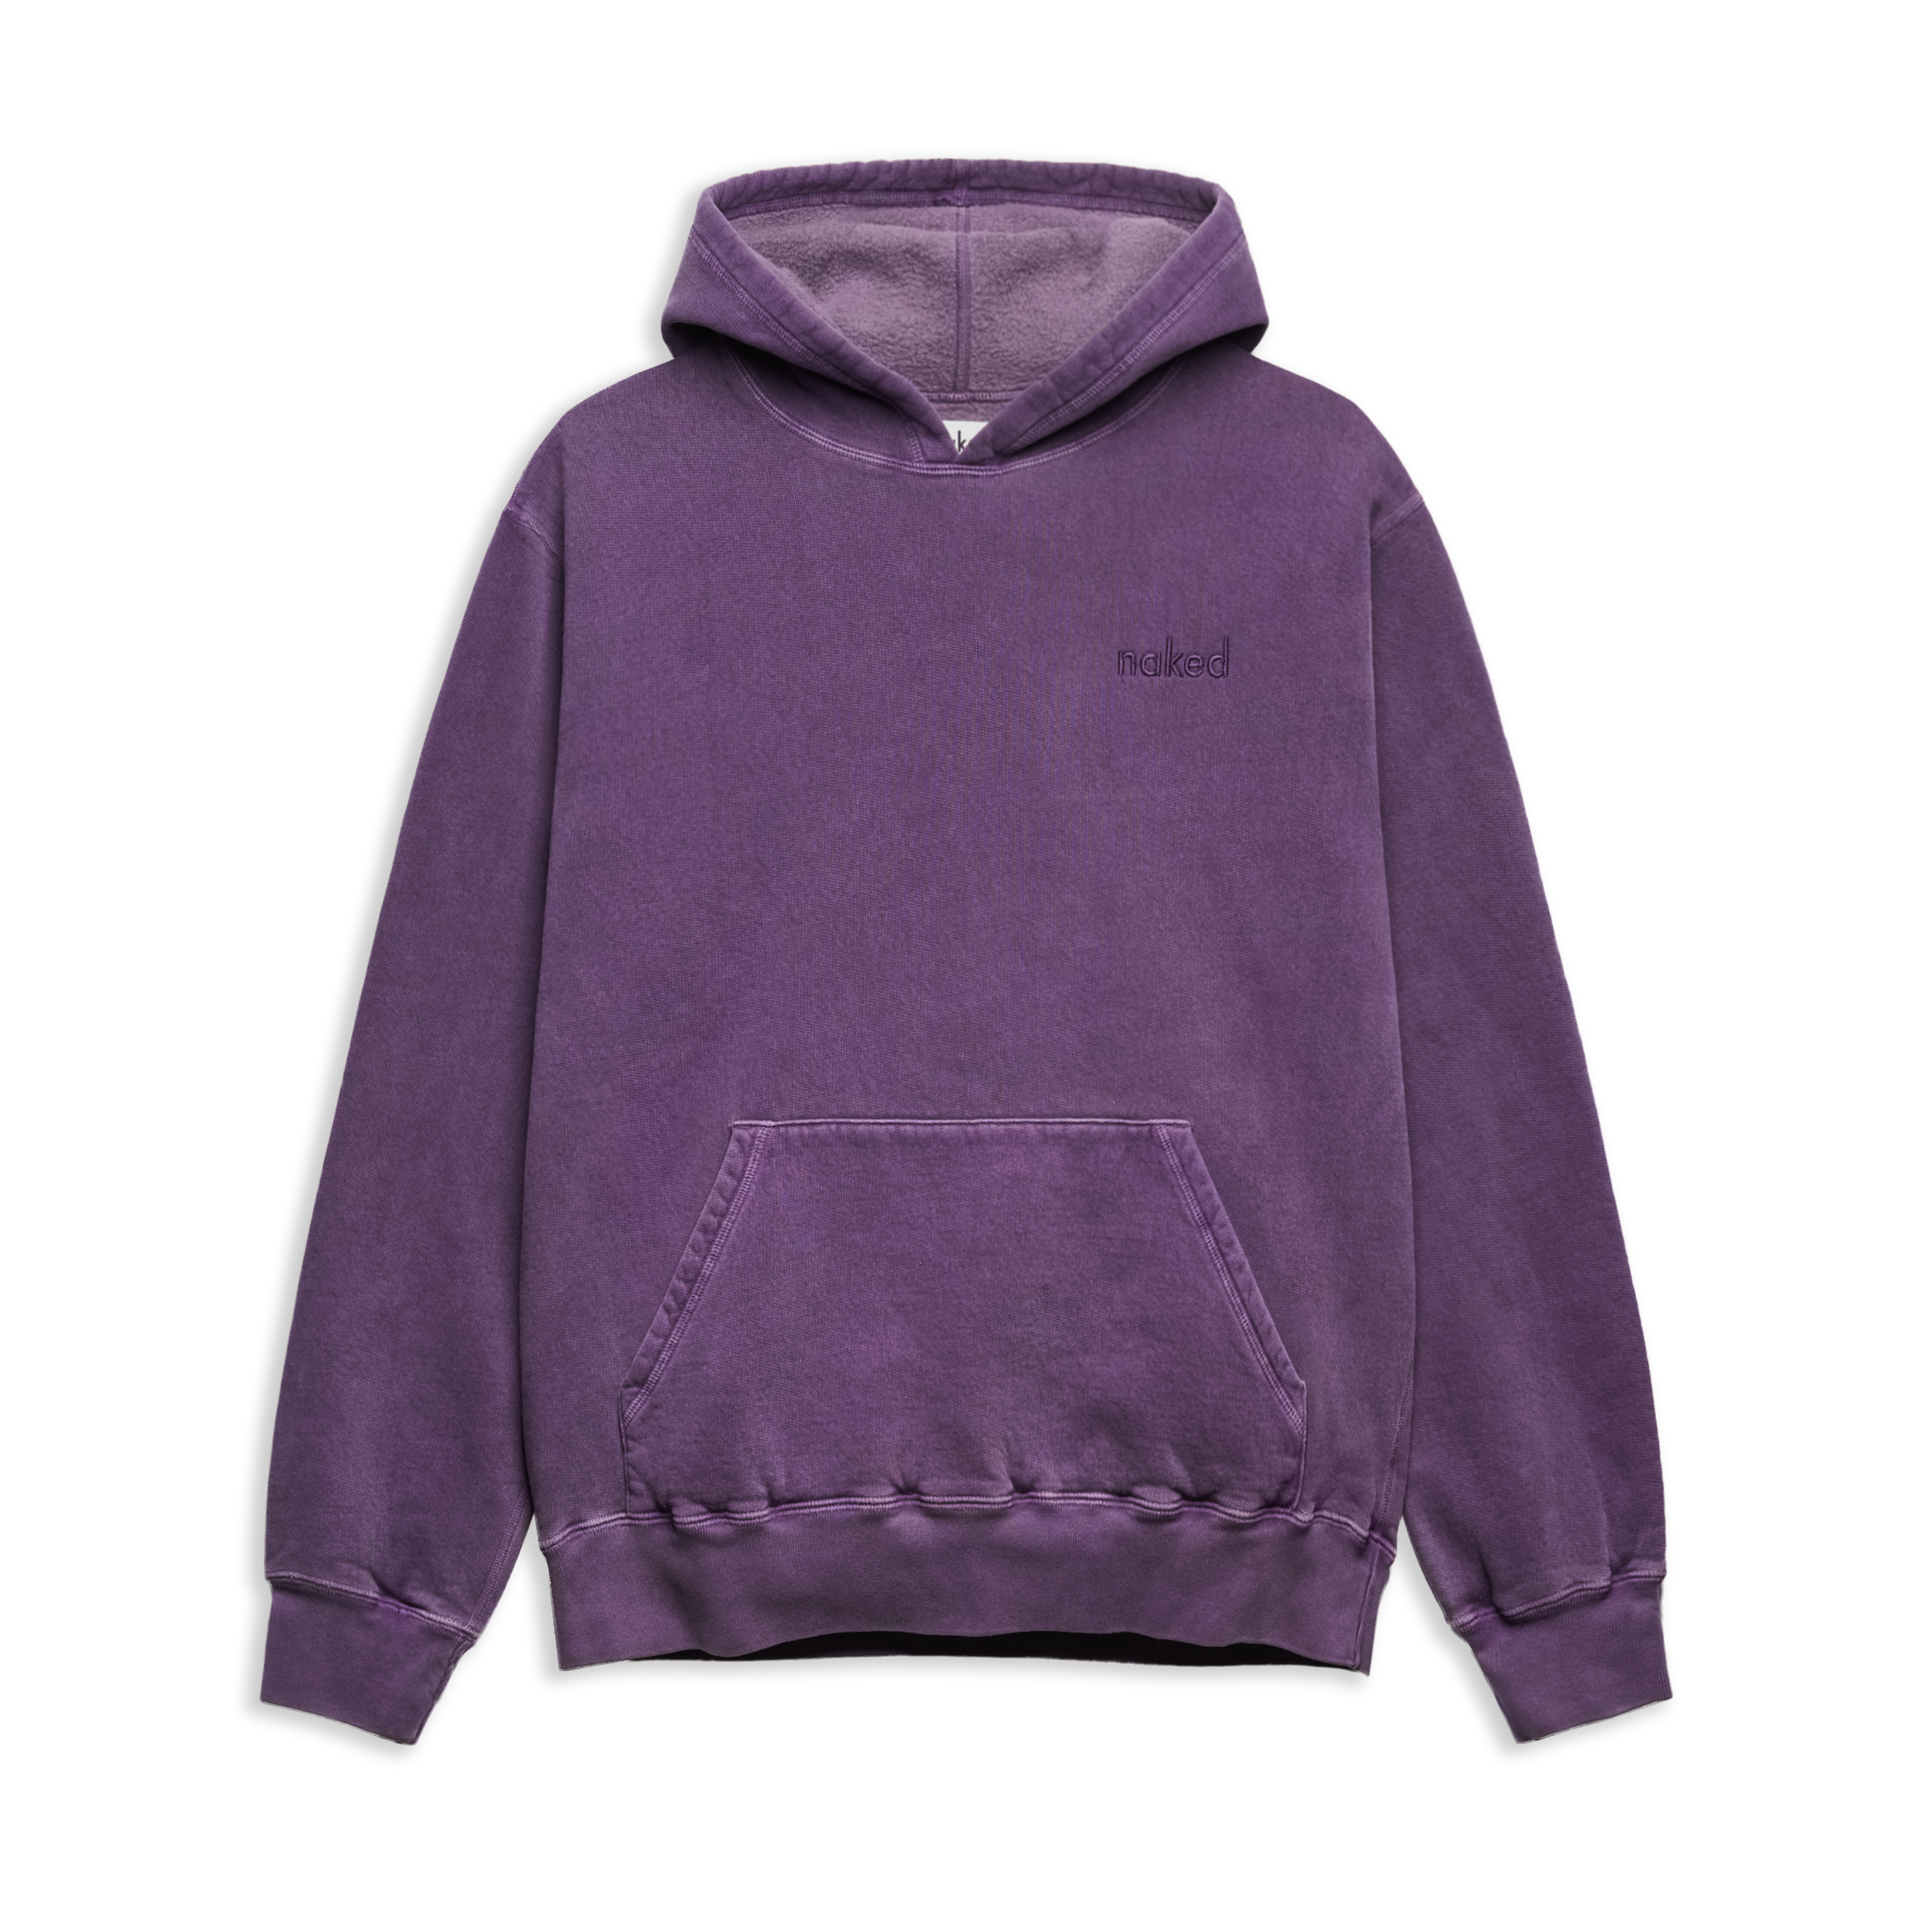 classic logo hoodie - purple